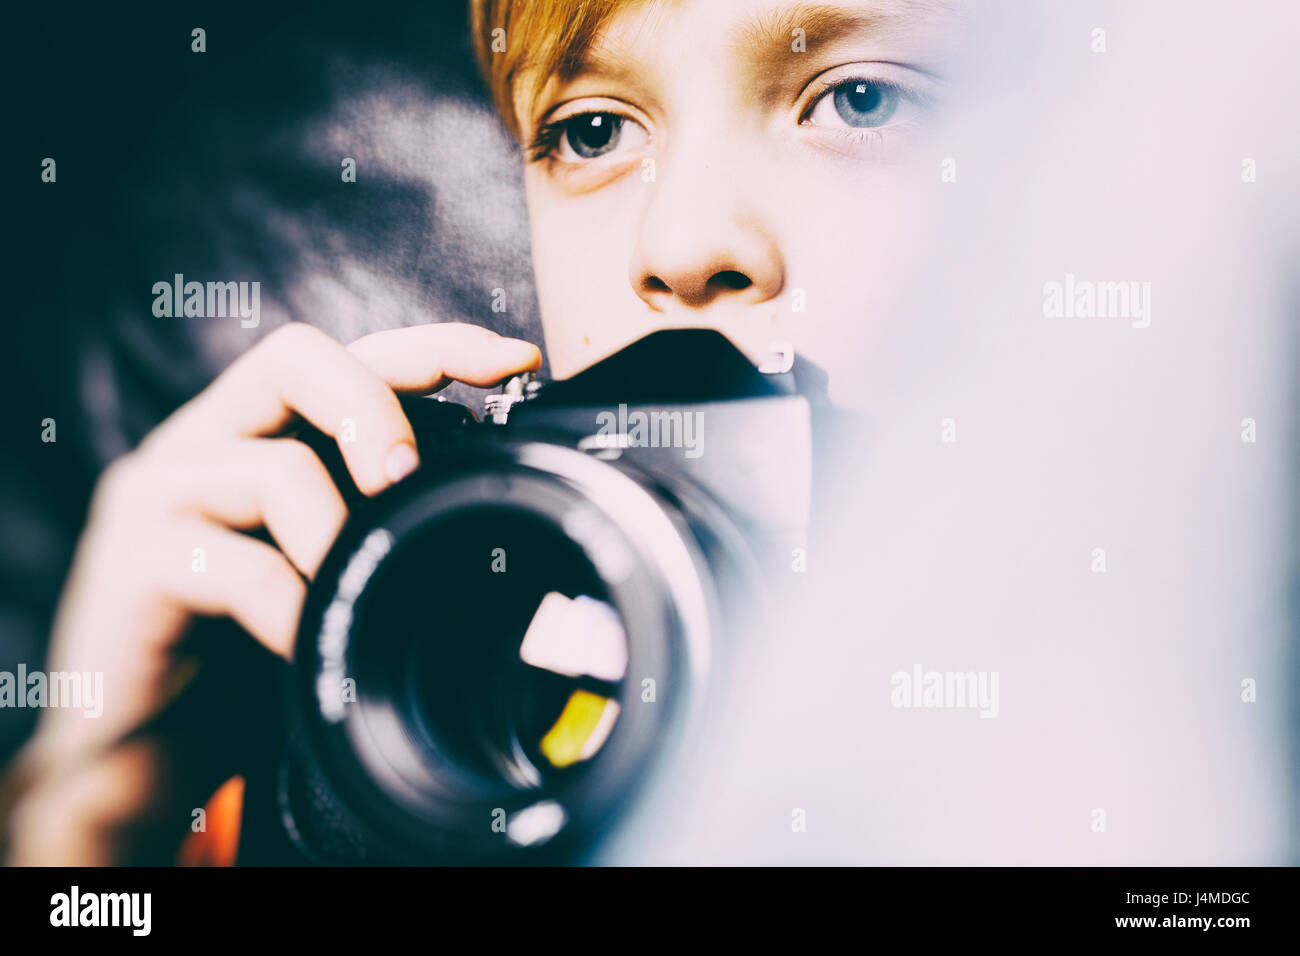 Close up of Caucasian boy holding camera Stock Photo